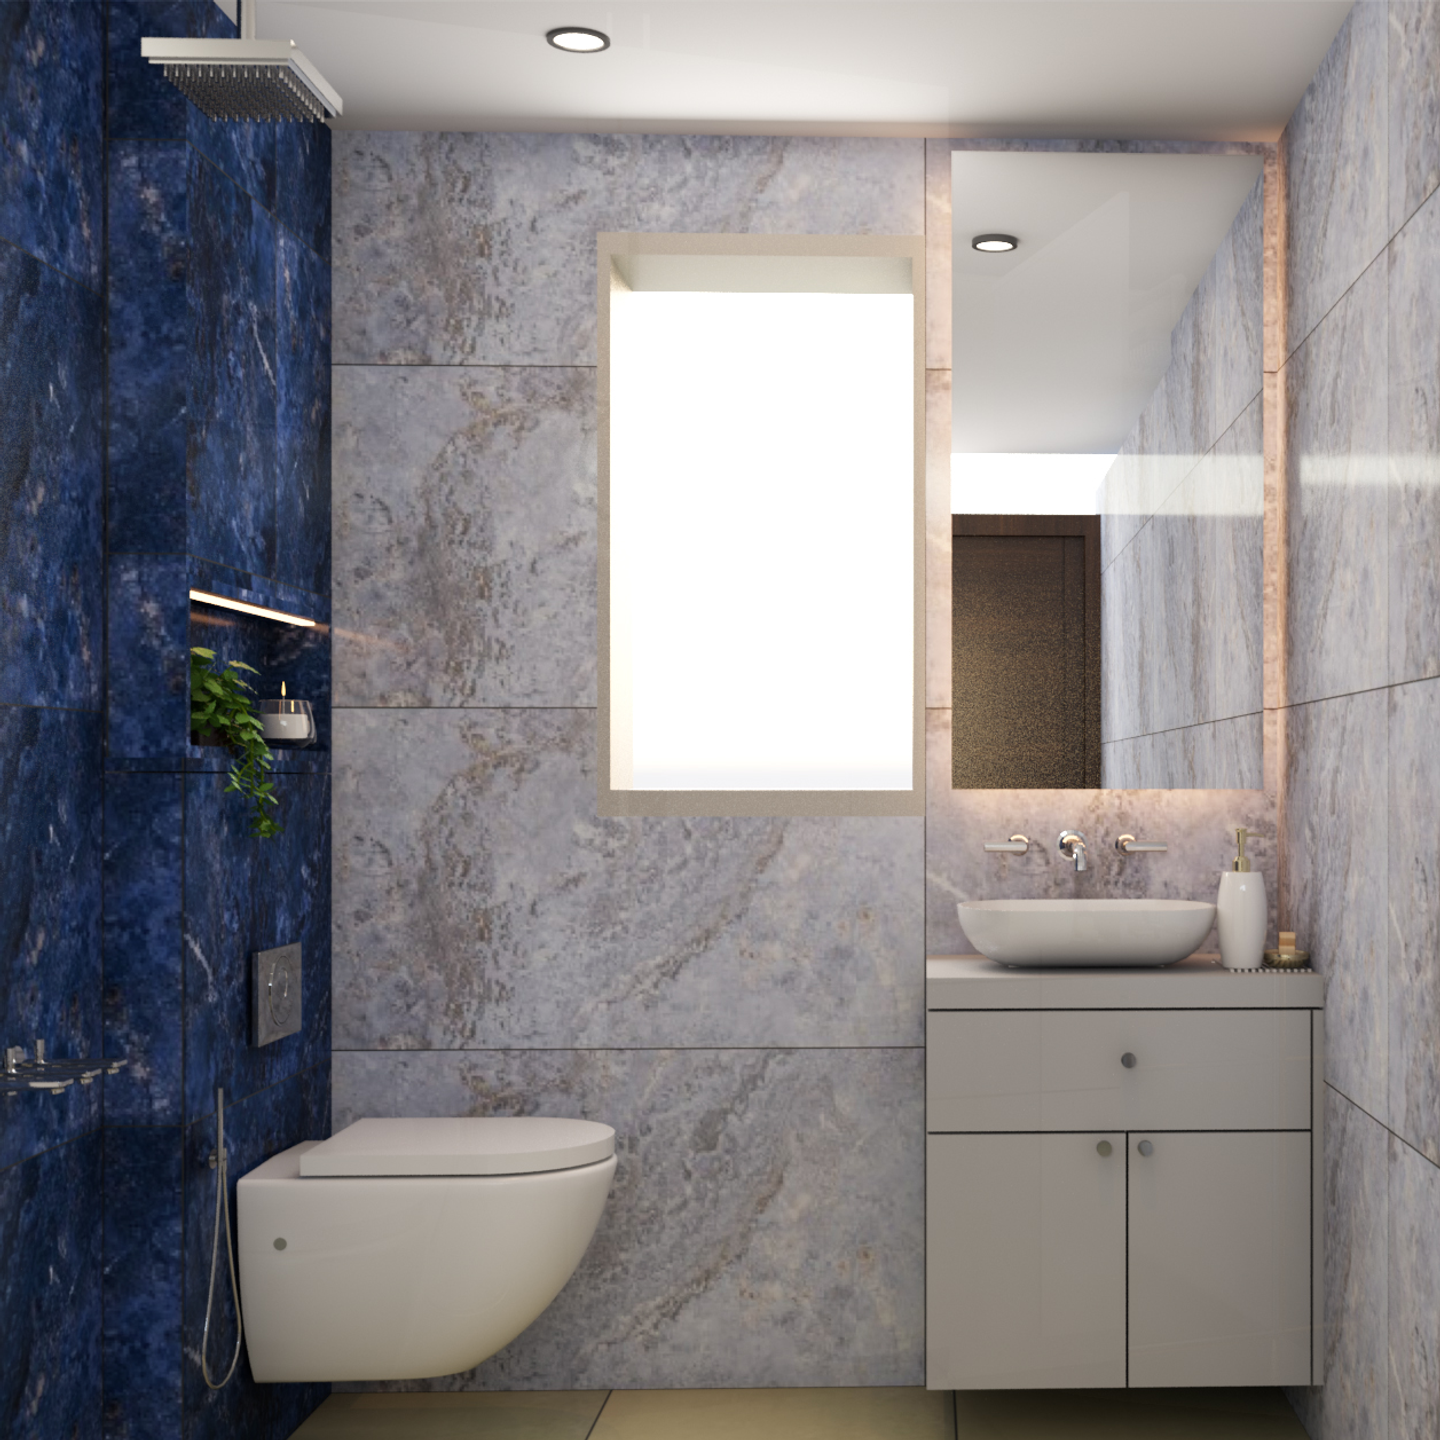 Blue And White Bathroom Design - Livspace